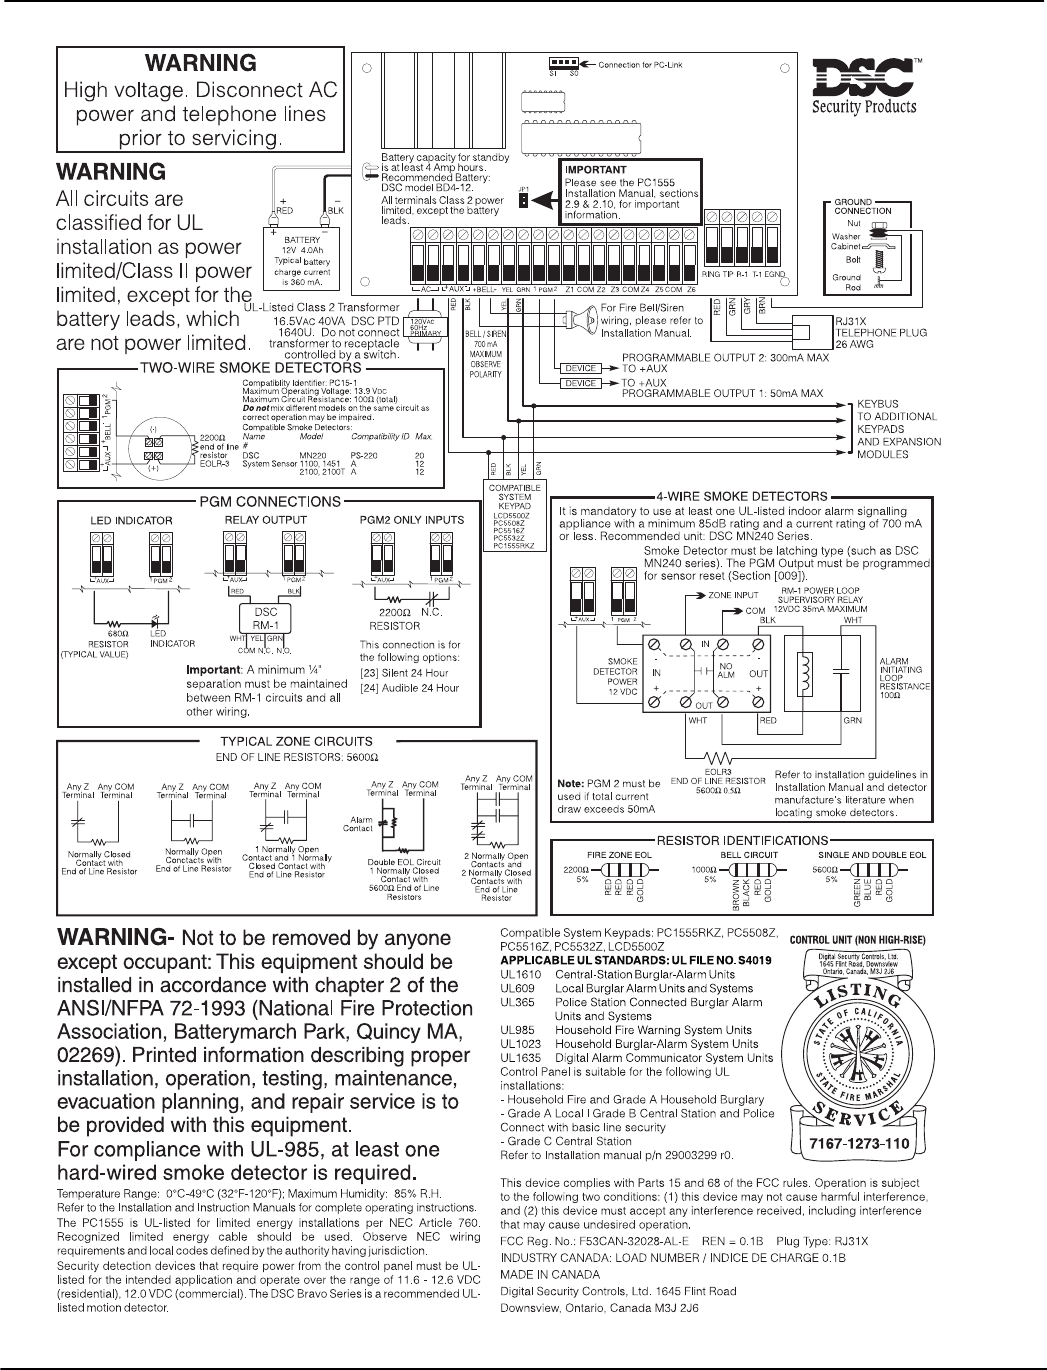 Pc1555rkz Wiring Diagram - Wiring Diagram